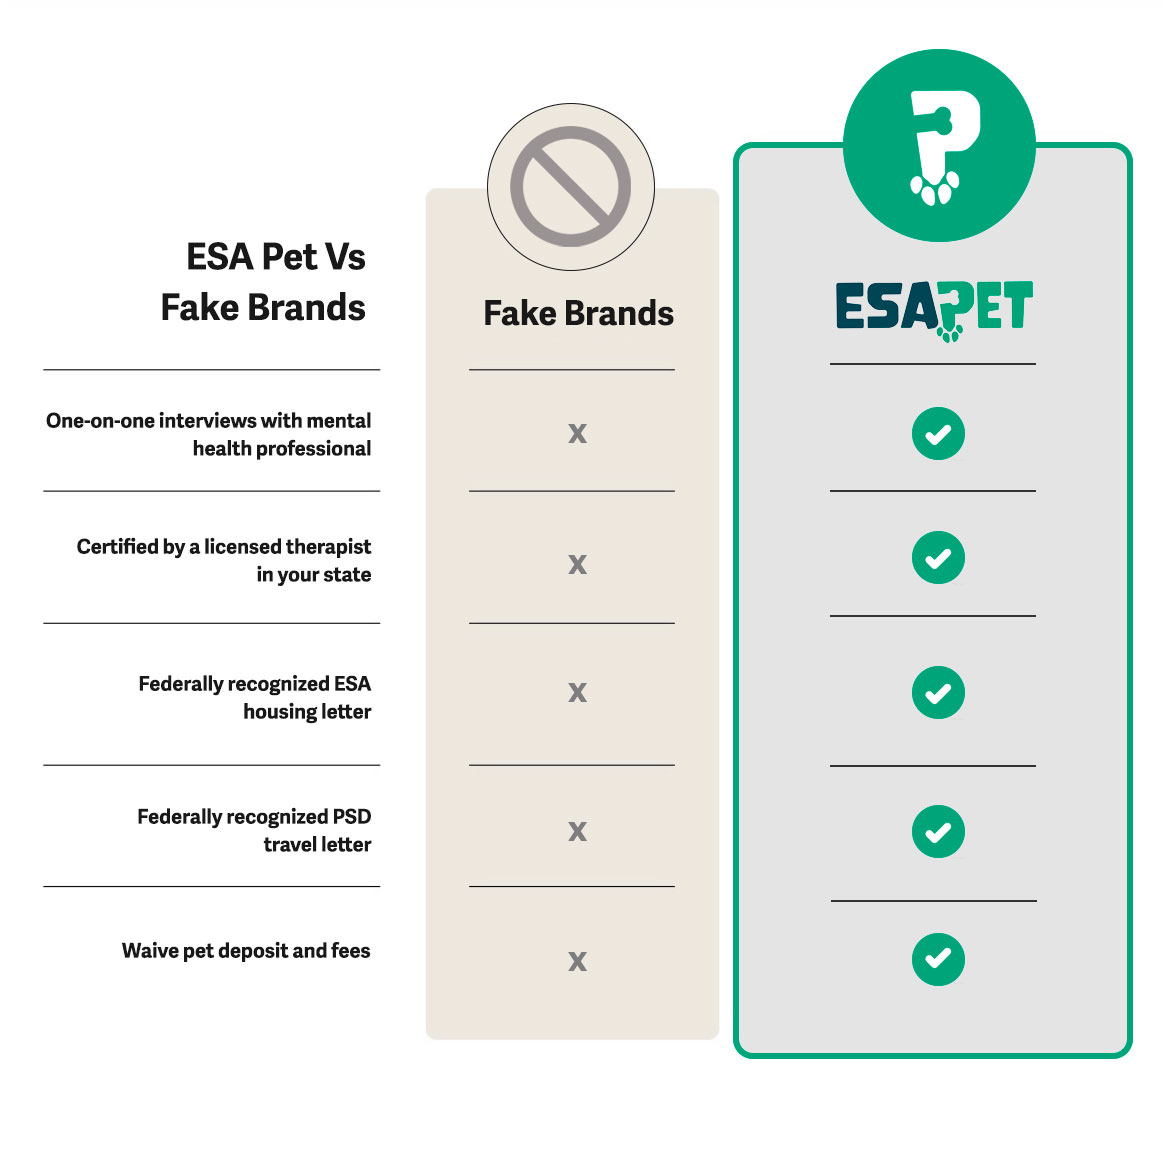 ESA Pet comparative table